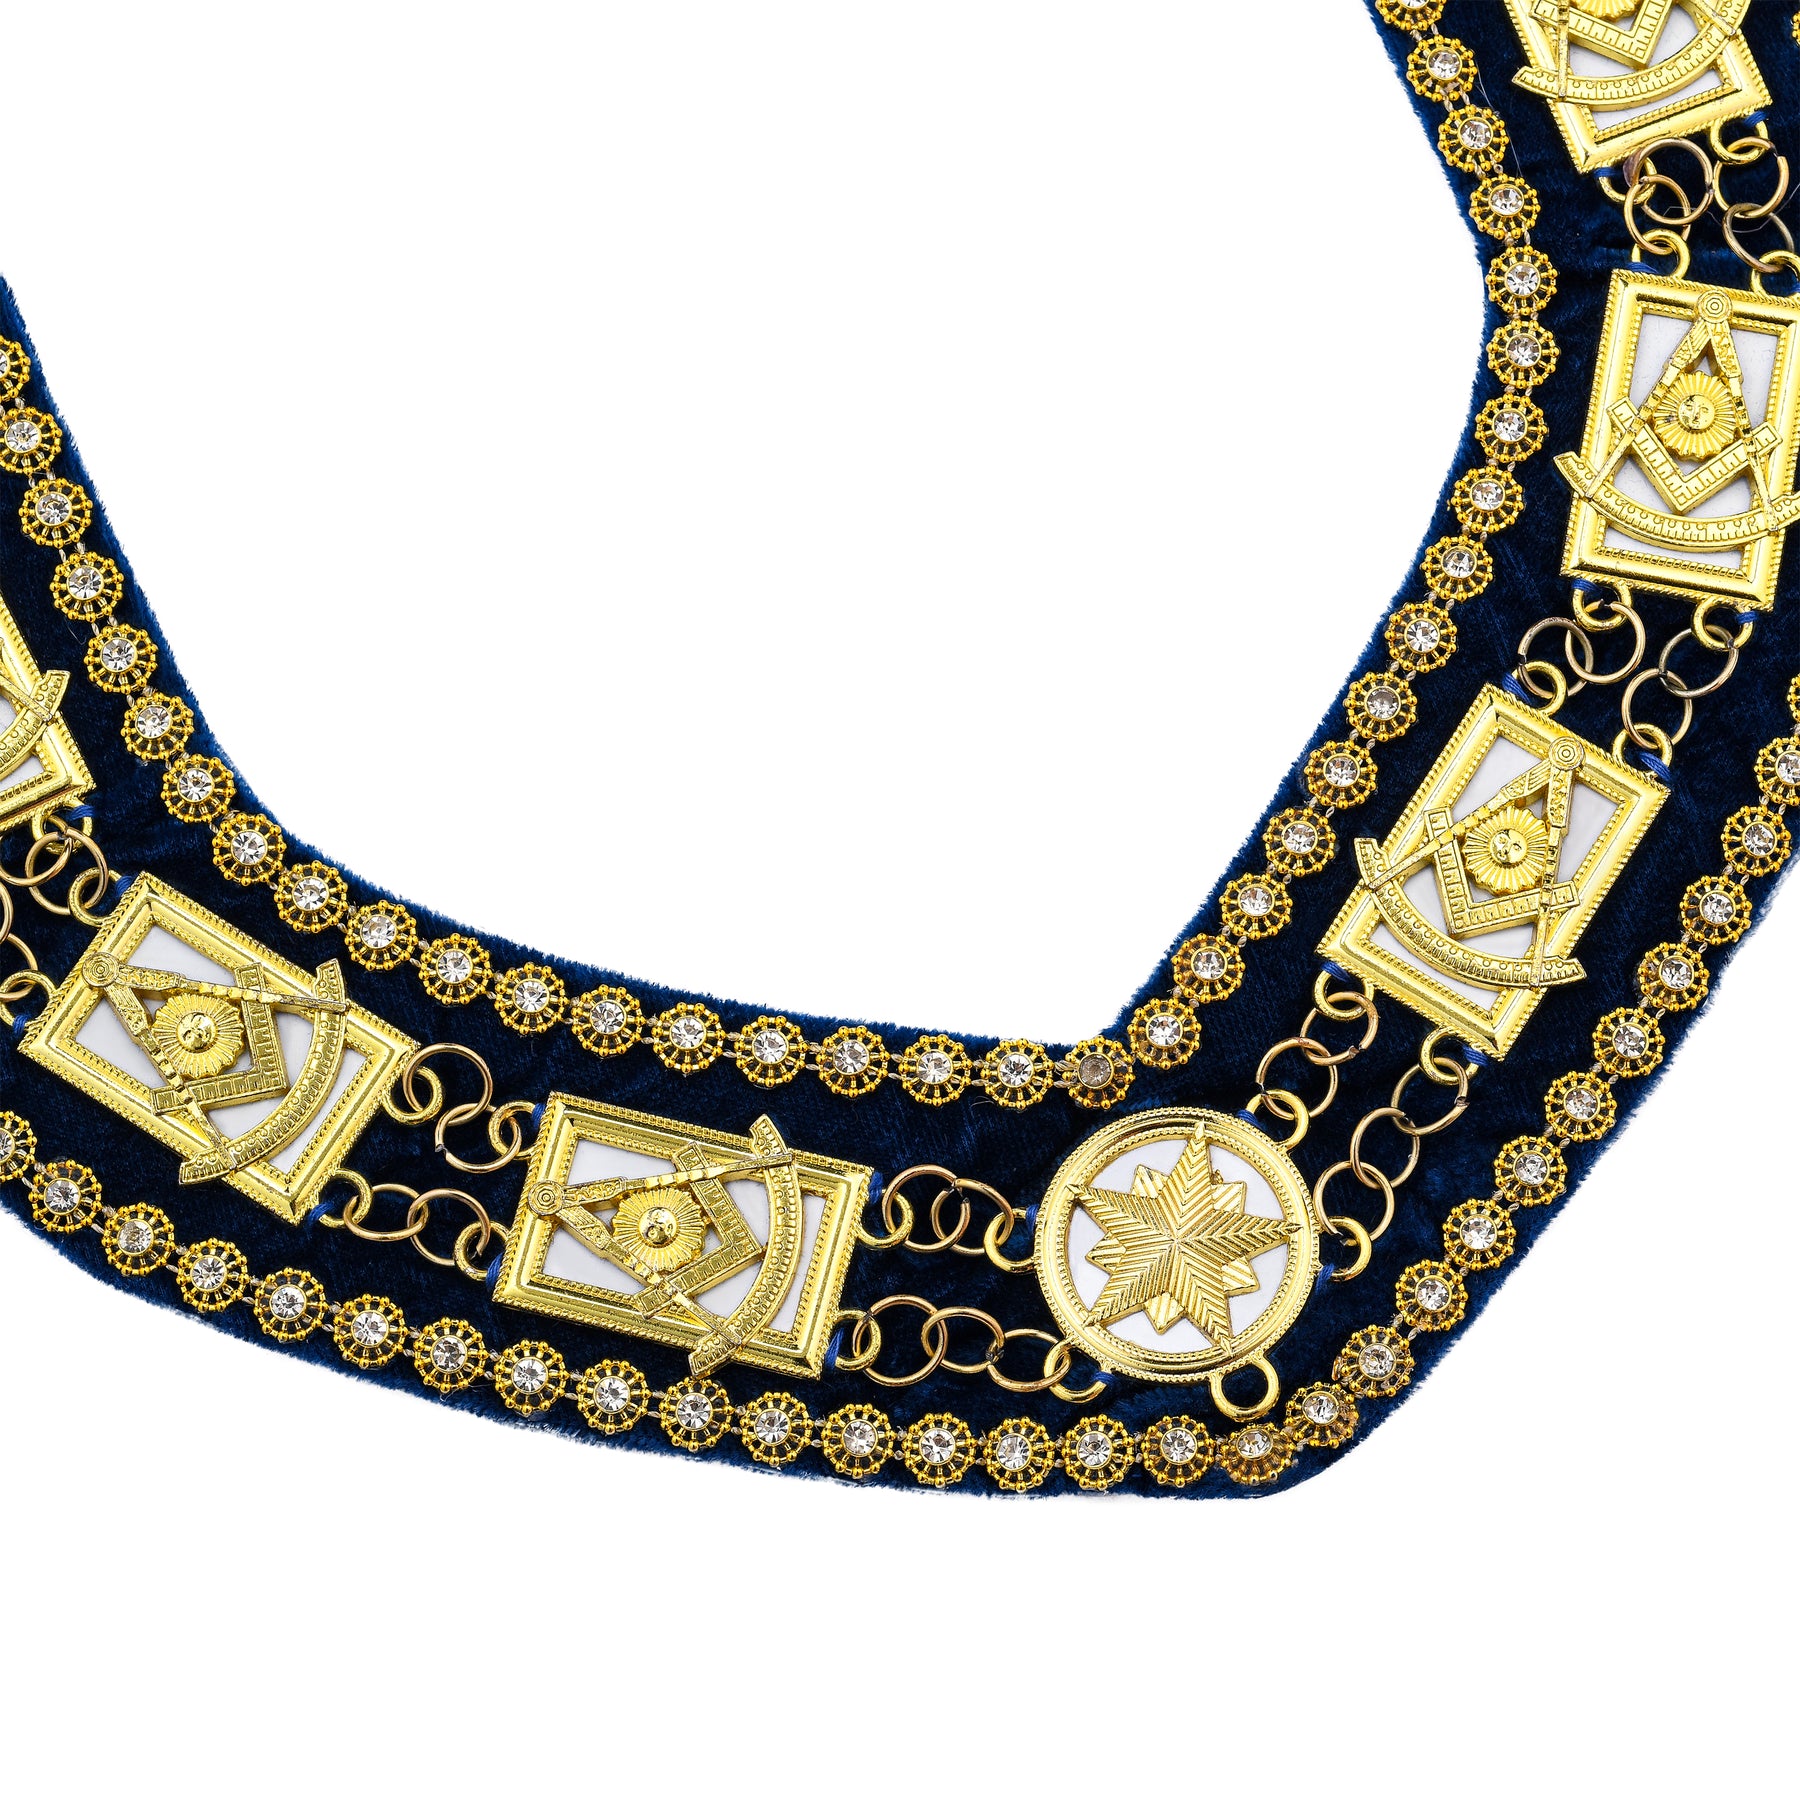 Past Master Blue Lodge Chain Collar - Blue Backing with Gold Rhinestones - Bricks Masons